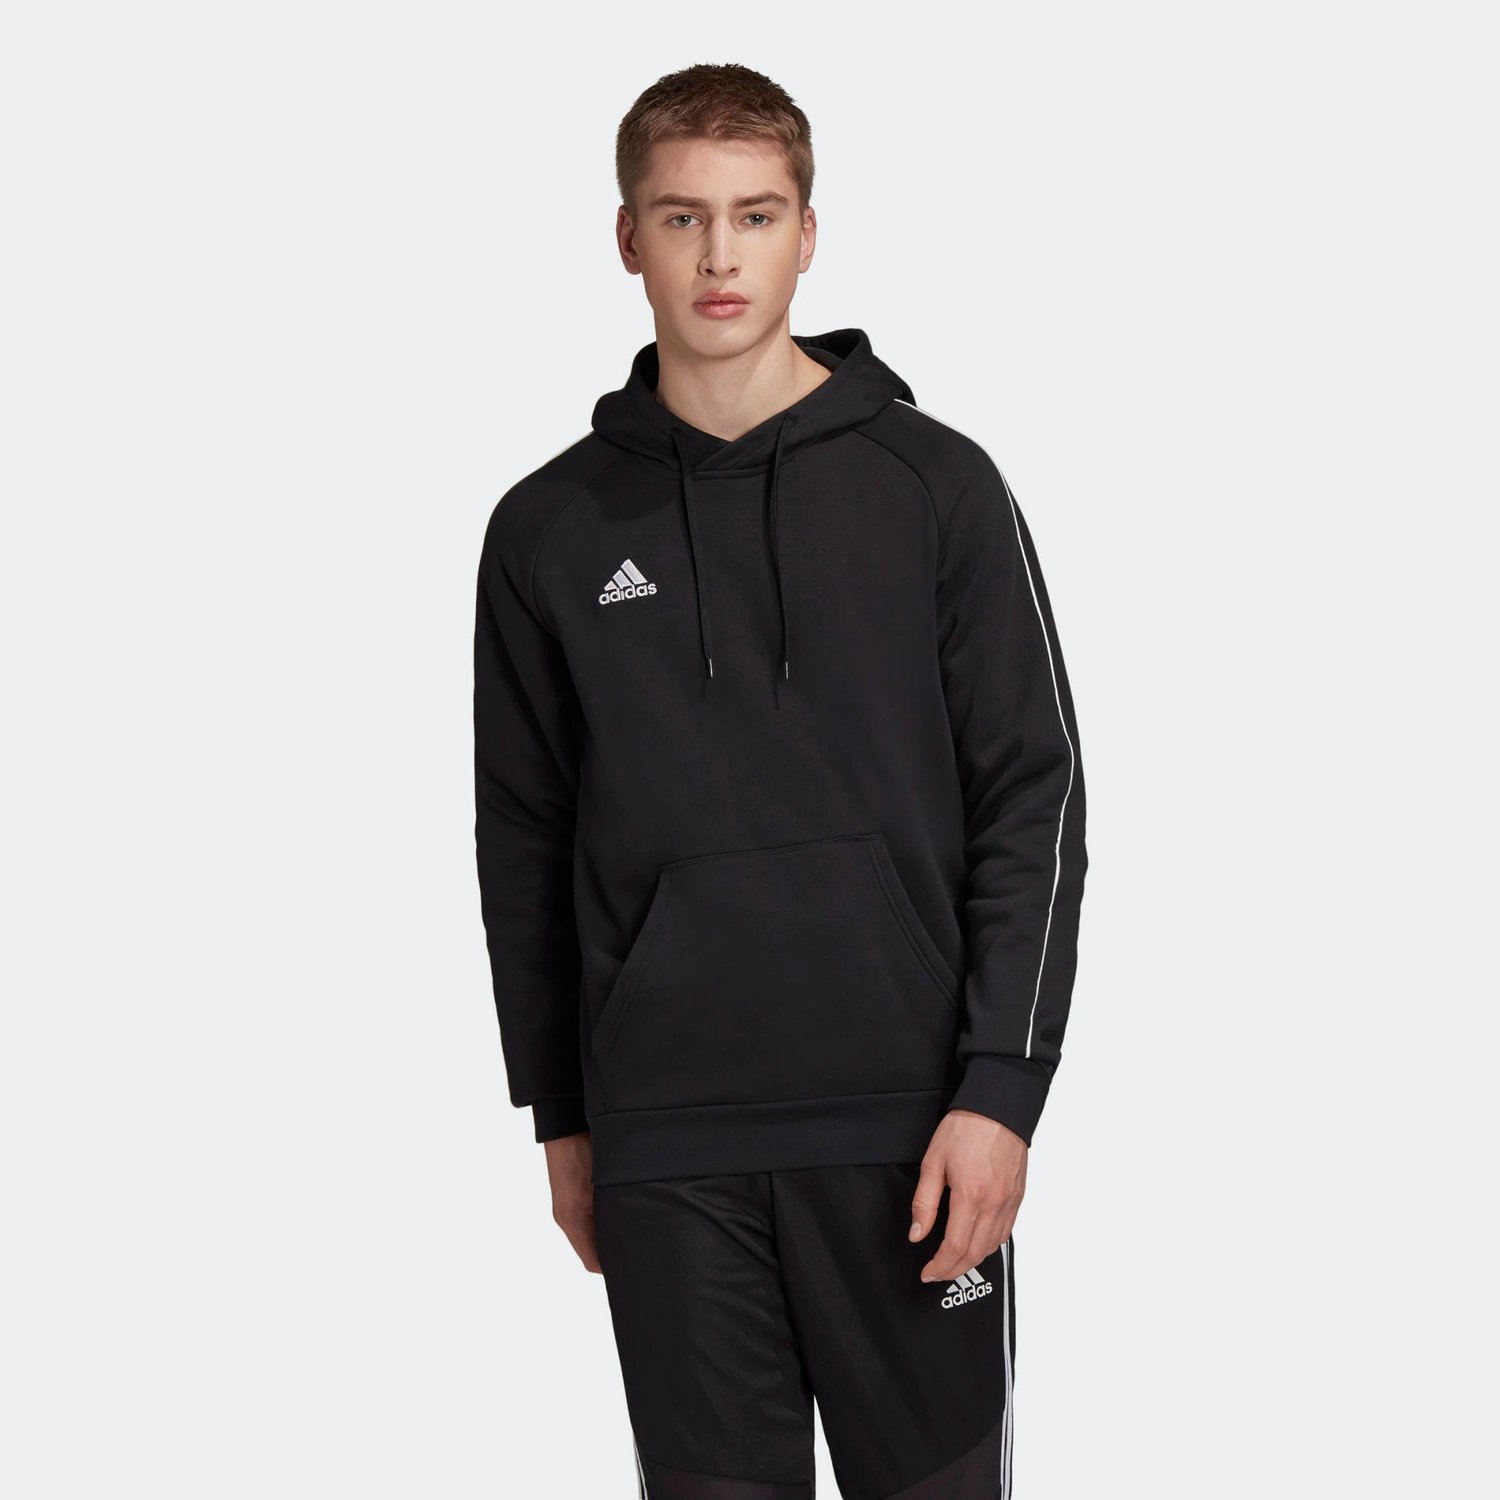 Bluza męska Core 18 Hoody Adidas - sklep internetowy Sport-Shop